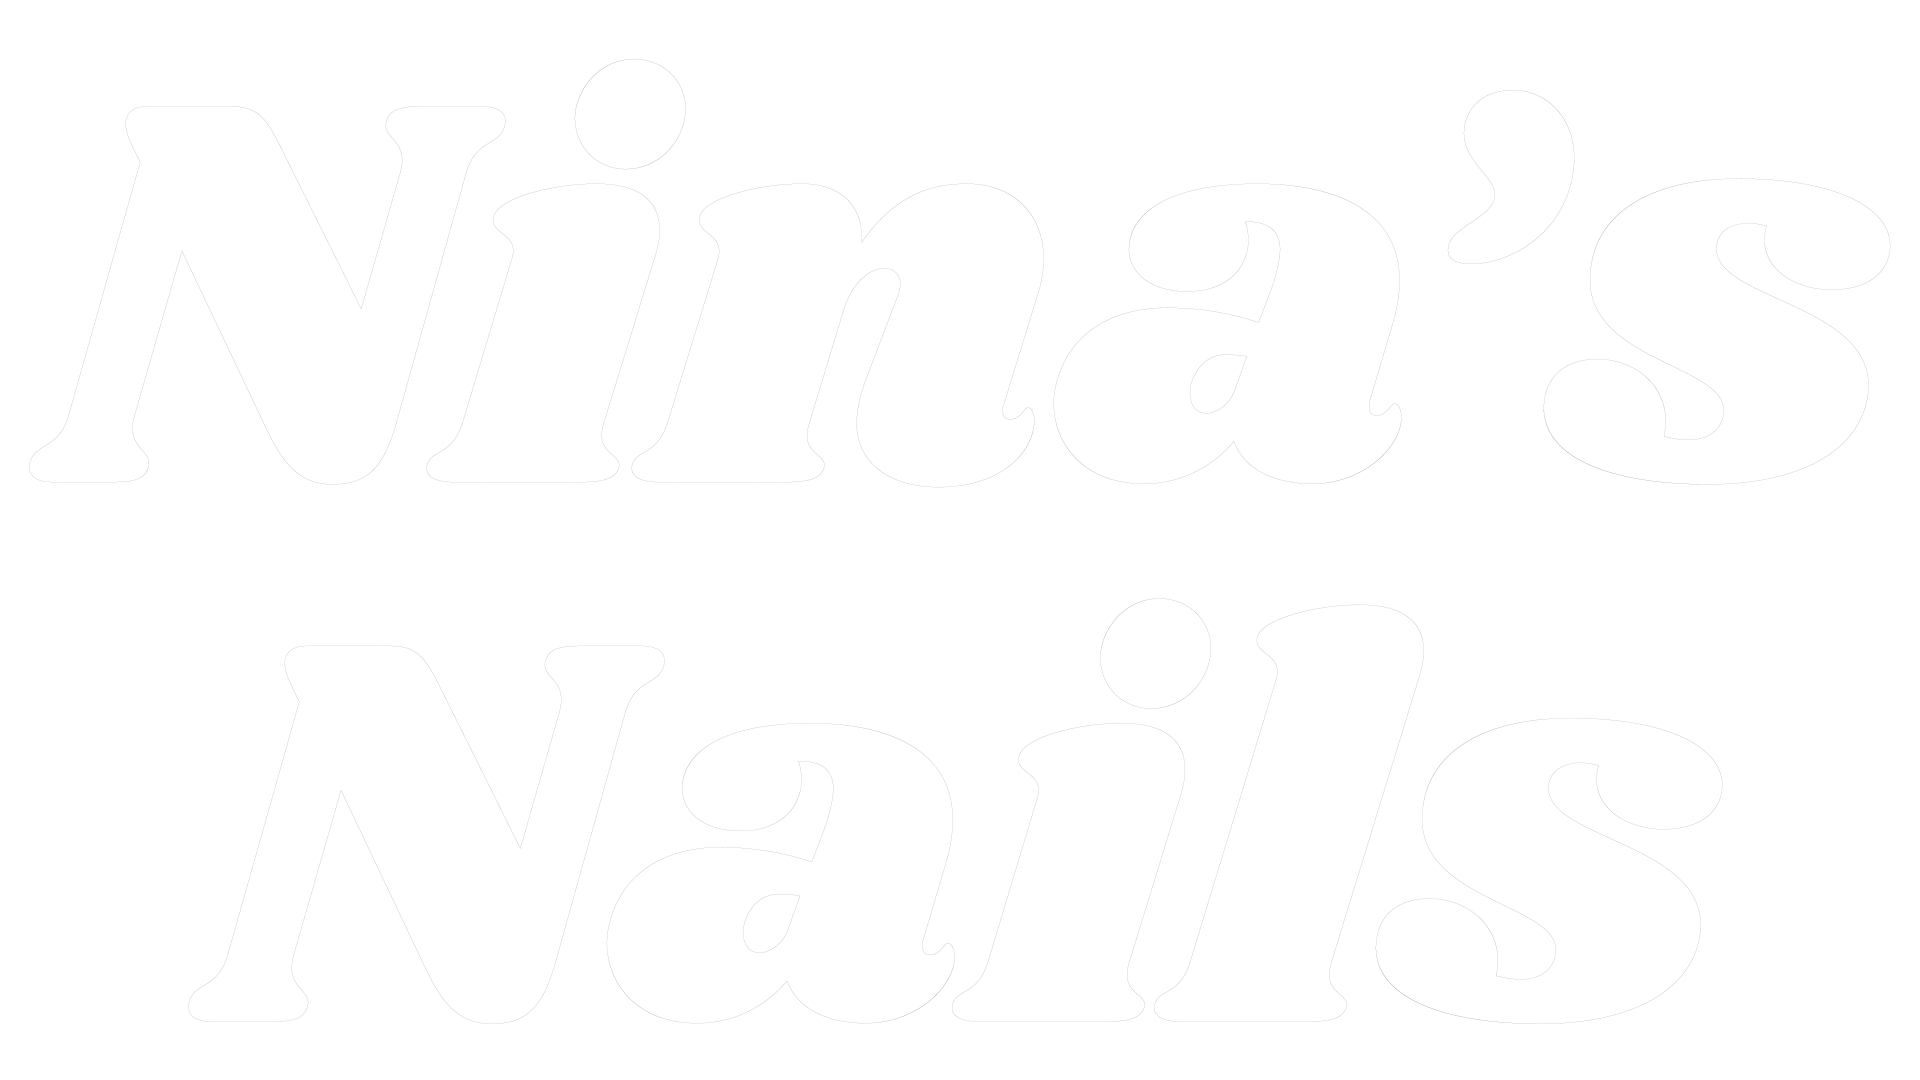 NINA'S NAILS